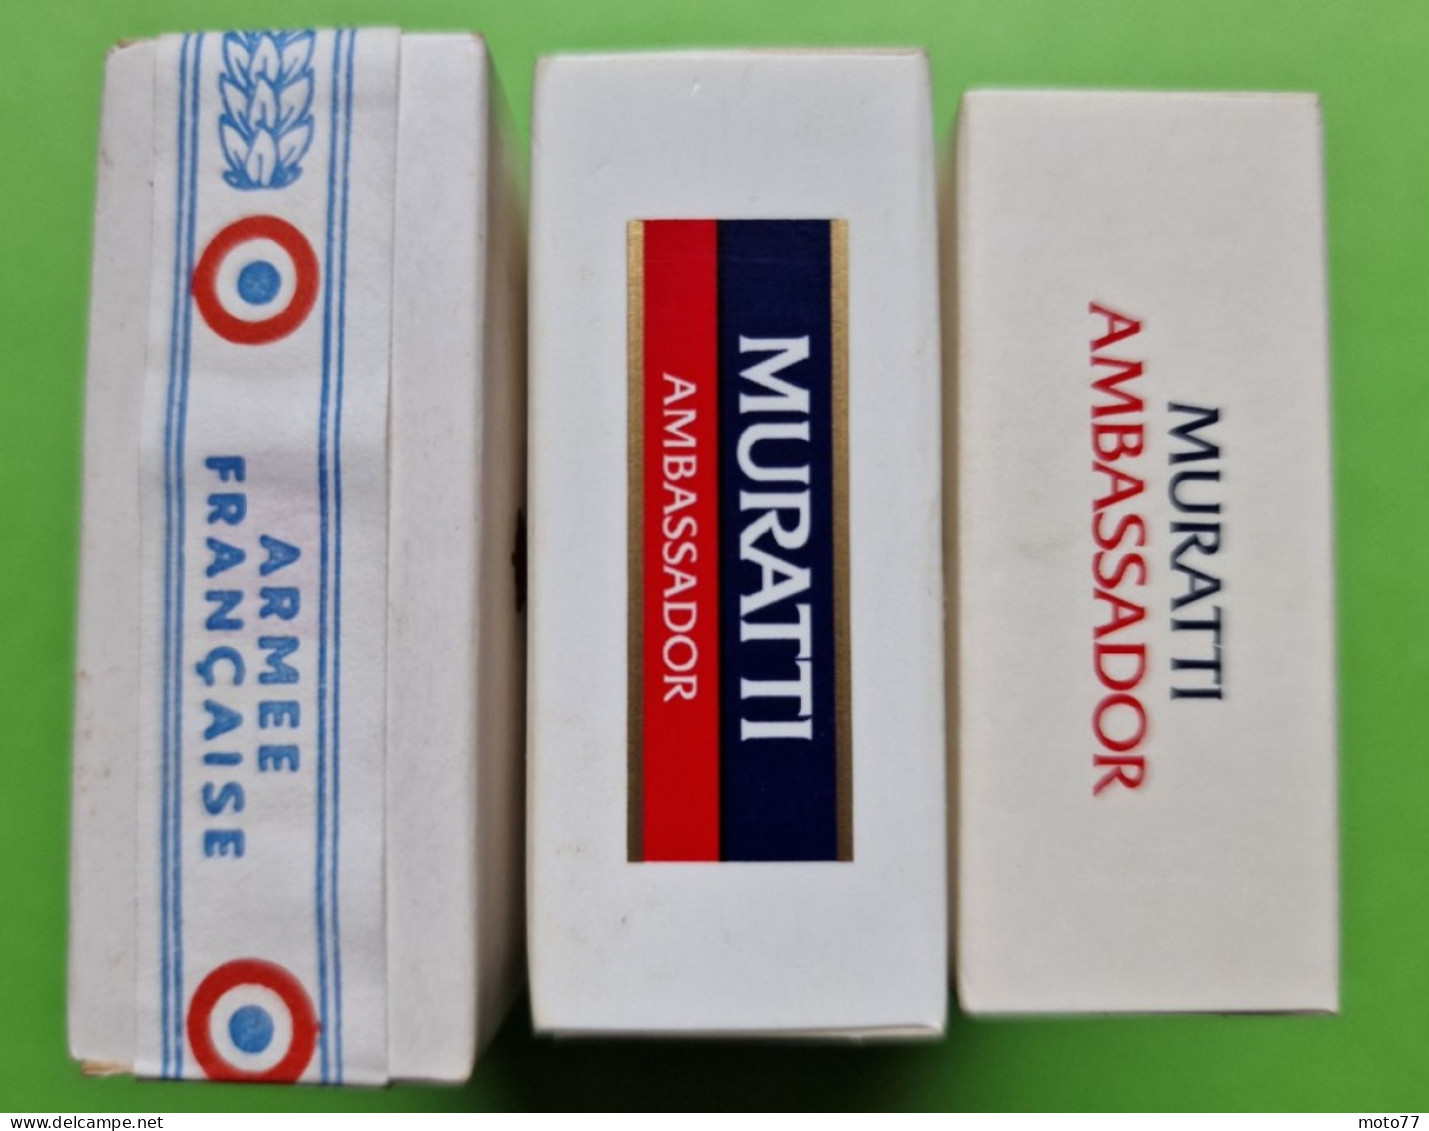 Lot 3 Anciens PAQUETS De CIGARETTES Vide - MURATTI - Un Paquet De L'armée Française - Vers 1980 - Sigarettenkokers (leeg)